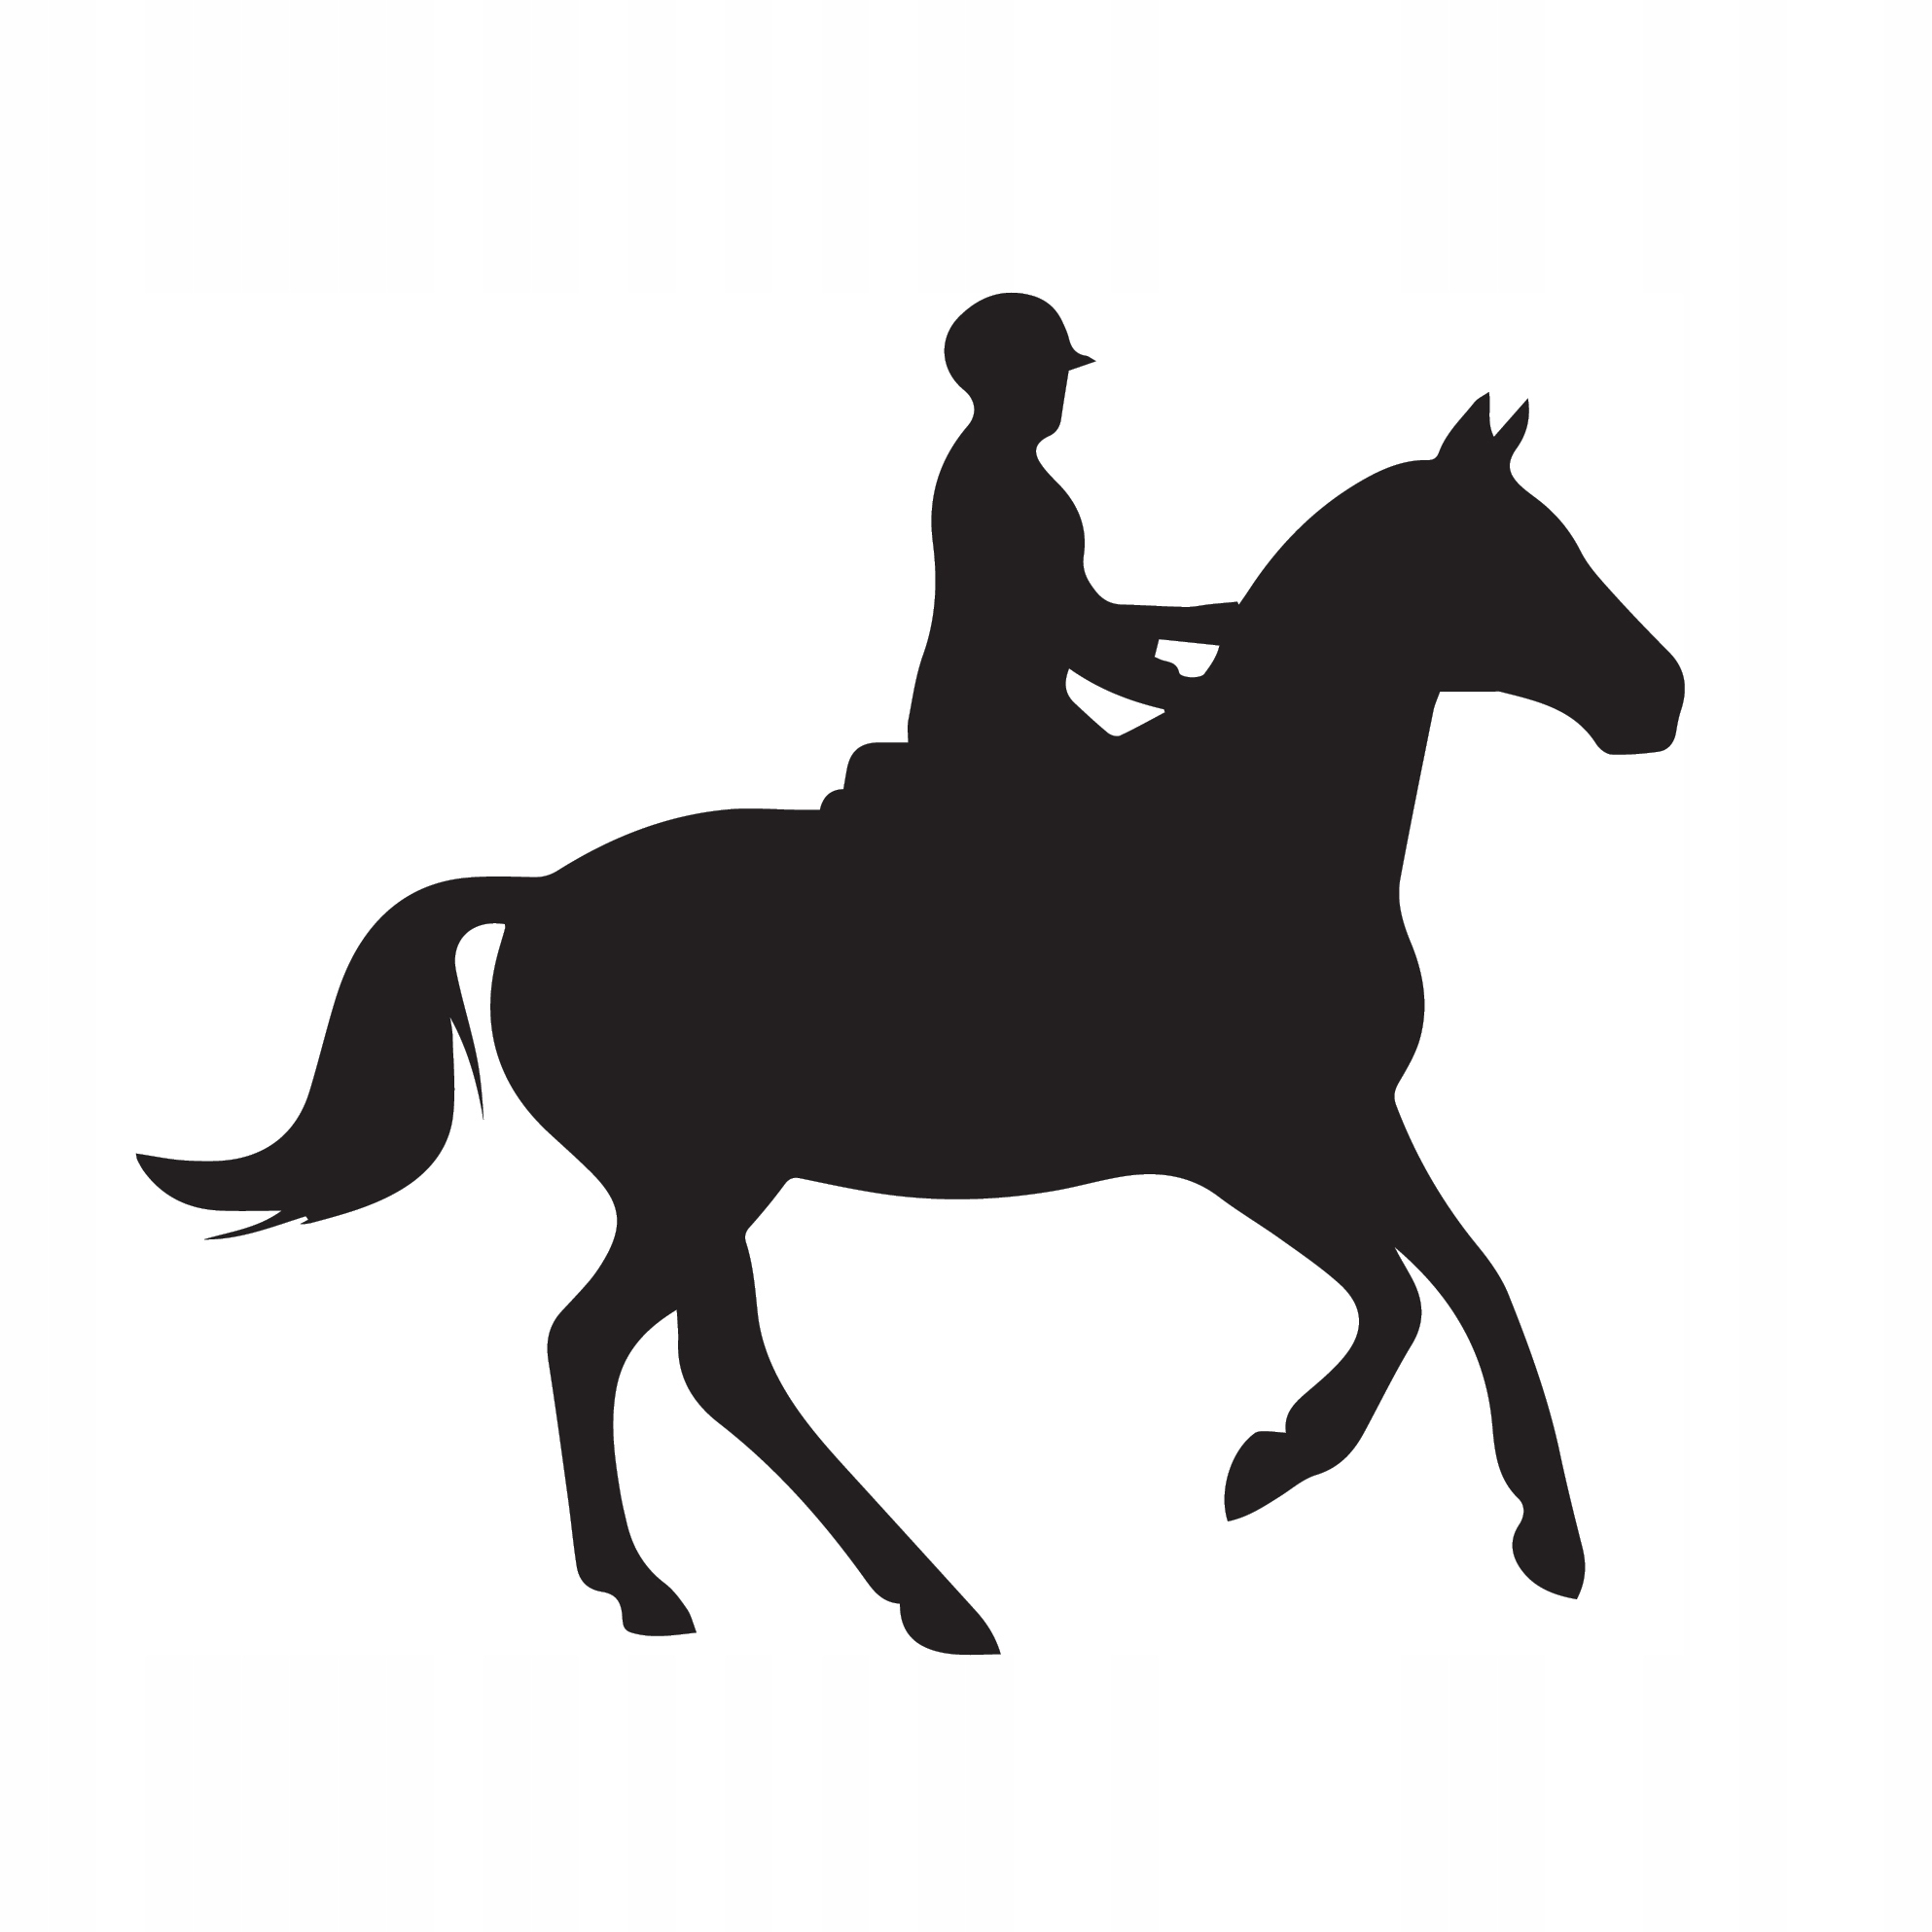 Naklejka KOŃ NA SAMOCHÓD konie HOBBY jeździectwo